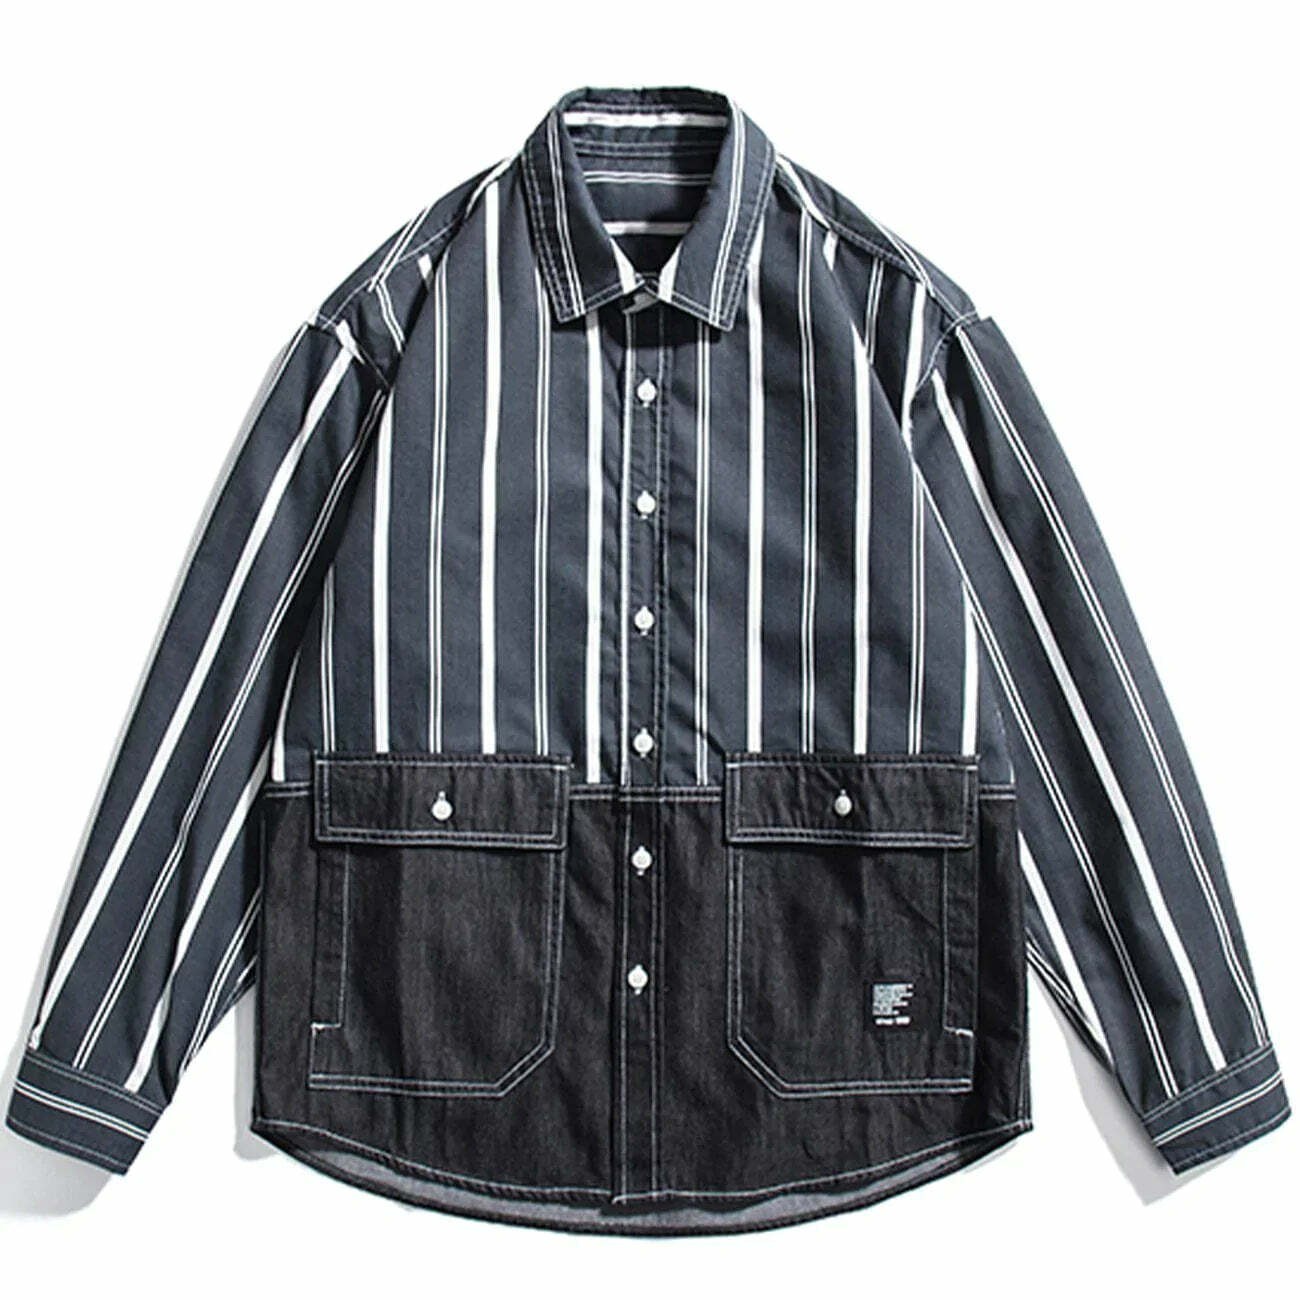 dynamic stripe splicing denim shirt edgy longsleeved style 5074